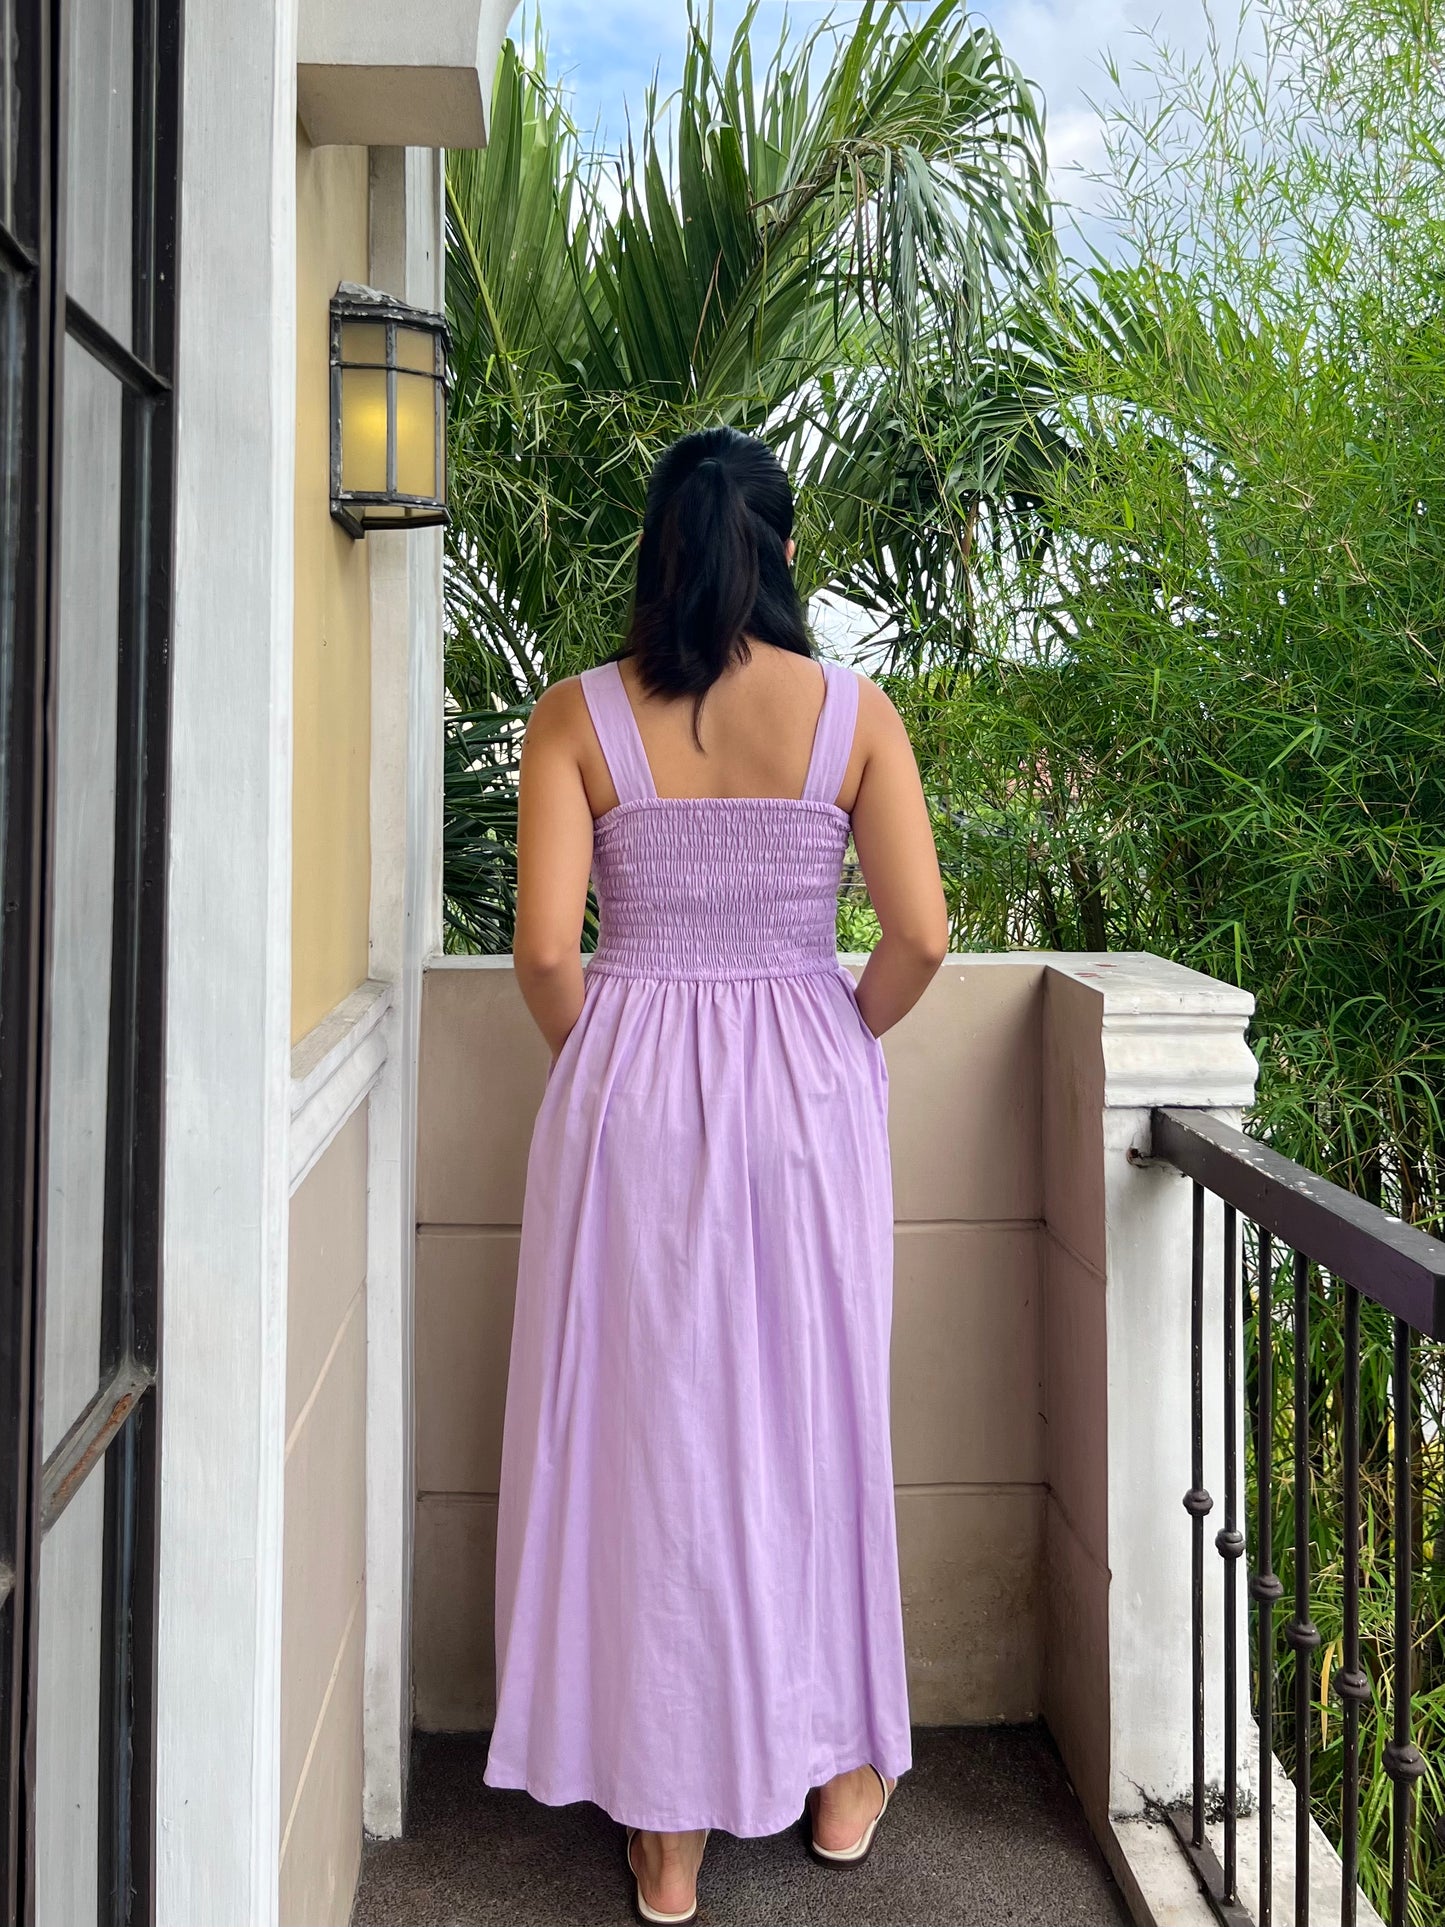 Brixton Dress in Lavender